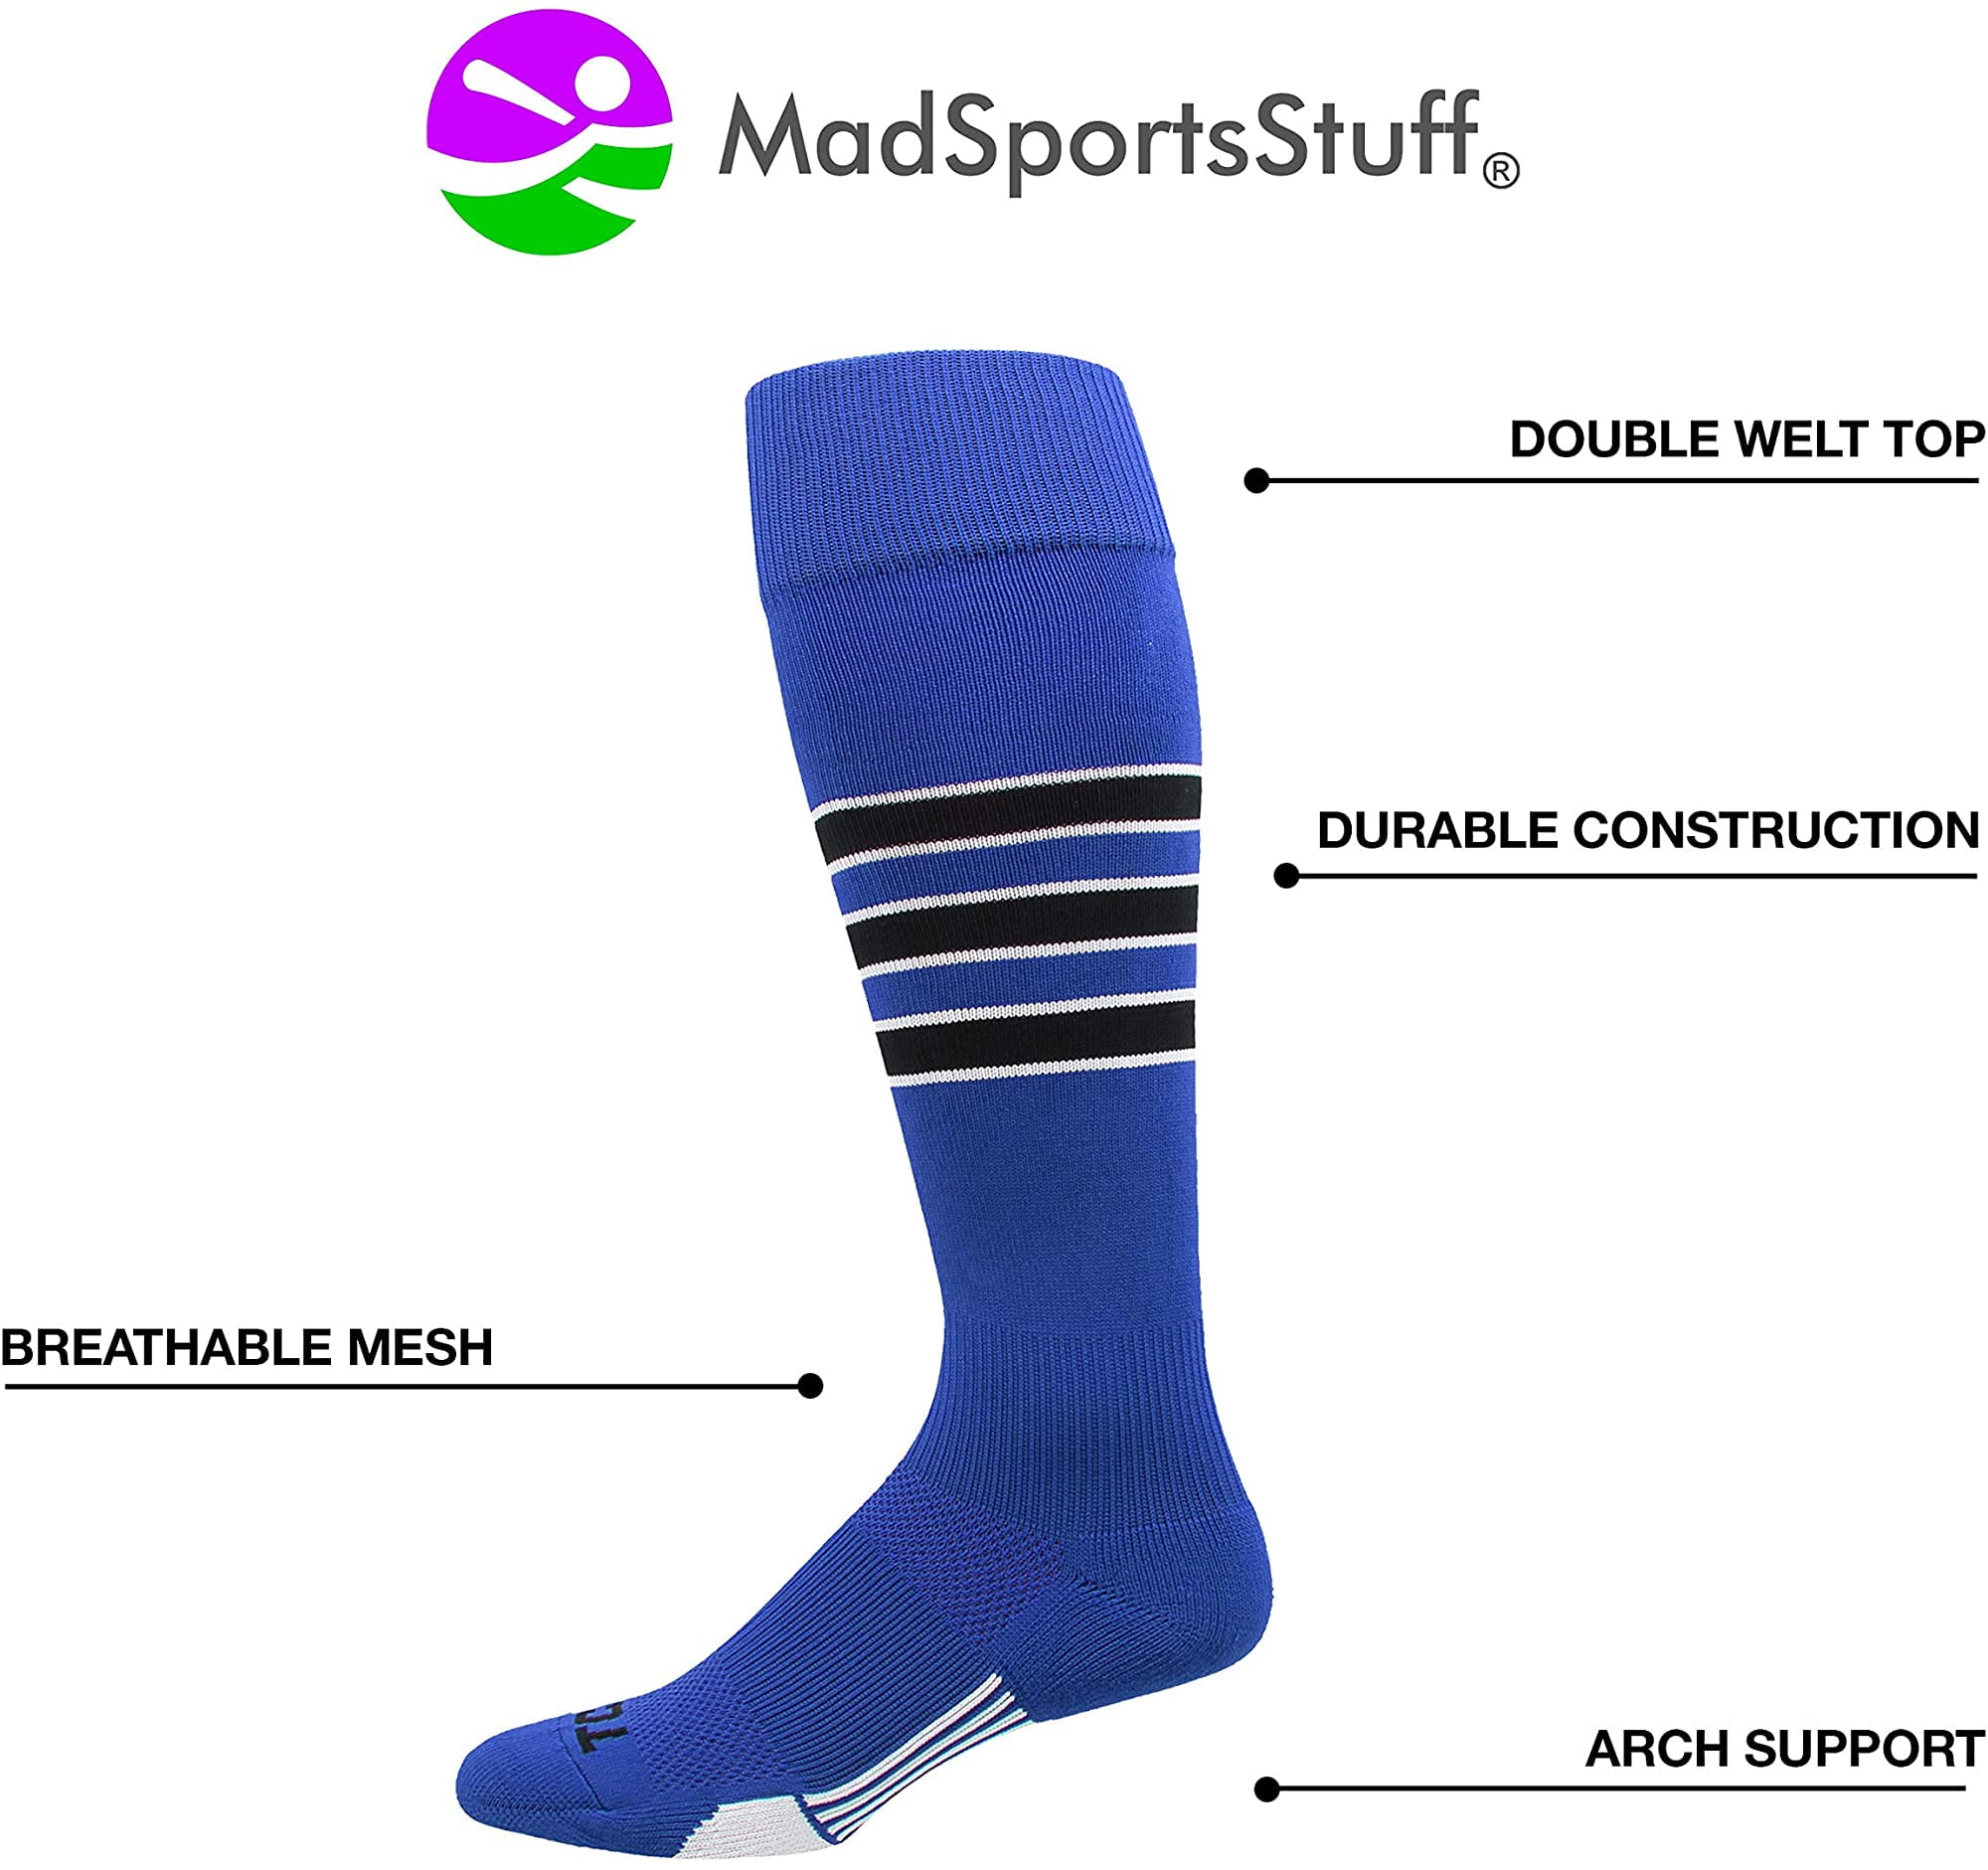 MadSportsStuff Dugout 3 Stripe Baseball Socks Over The Calf Length Multiple Colors 